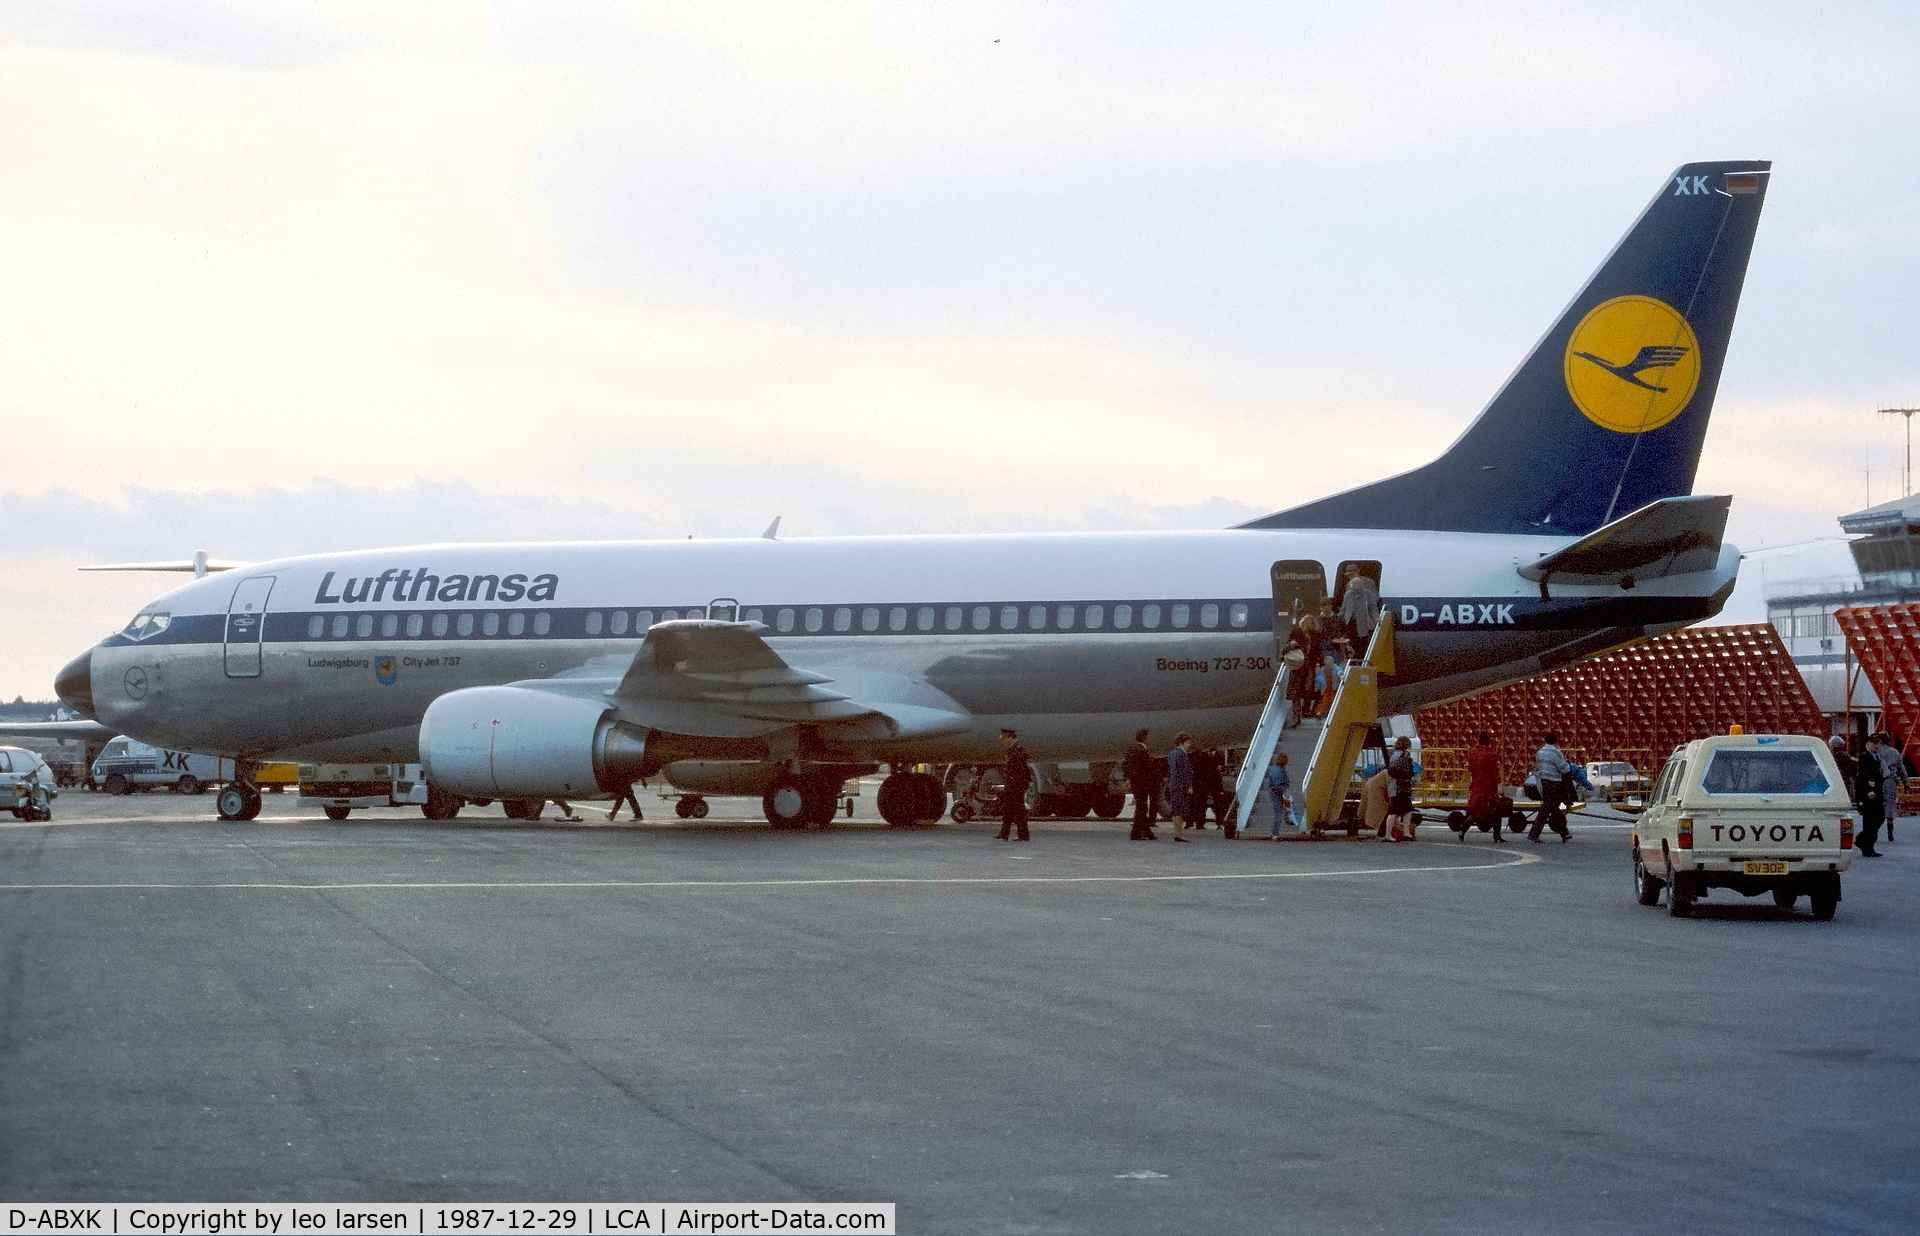 D-ABXK, 1986 Boeing 737-330 C/N 23530, Larnaca 29.12.1987